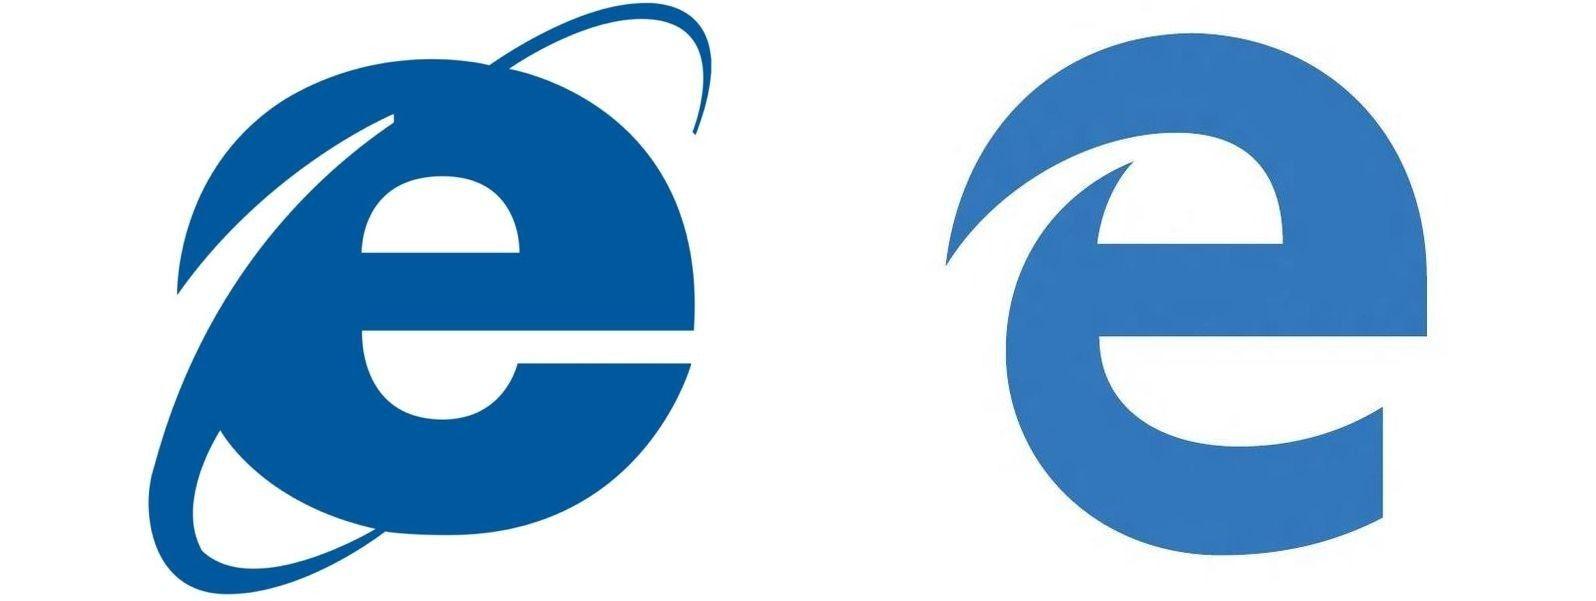 Windows Internet Explorer 10 Logo - The logo for the Microsoft Edge web browser looks very familiar ...